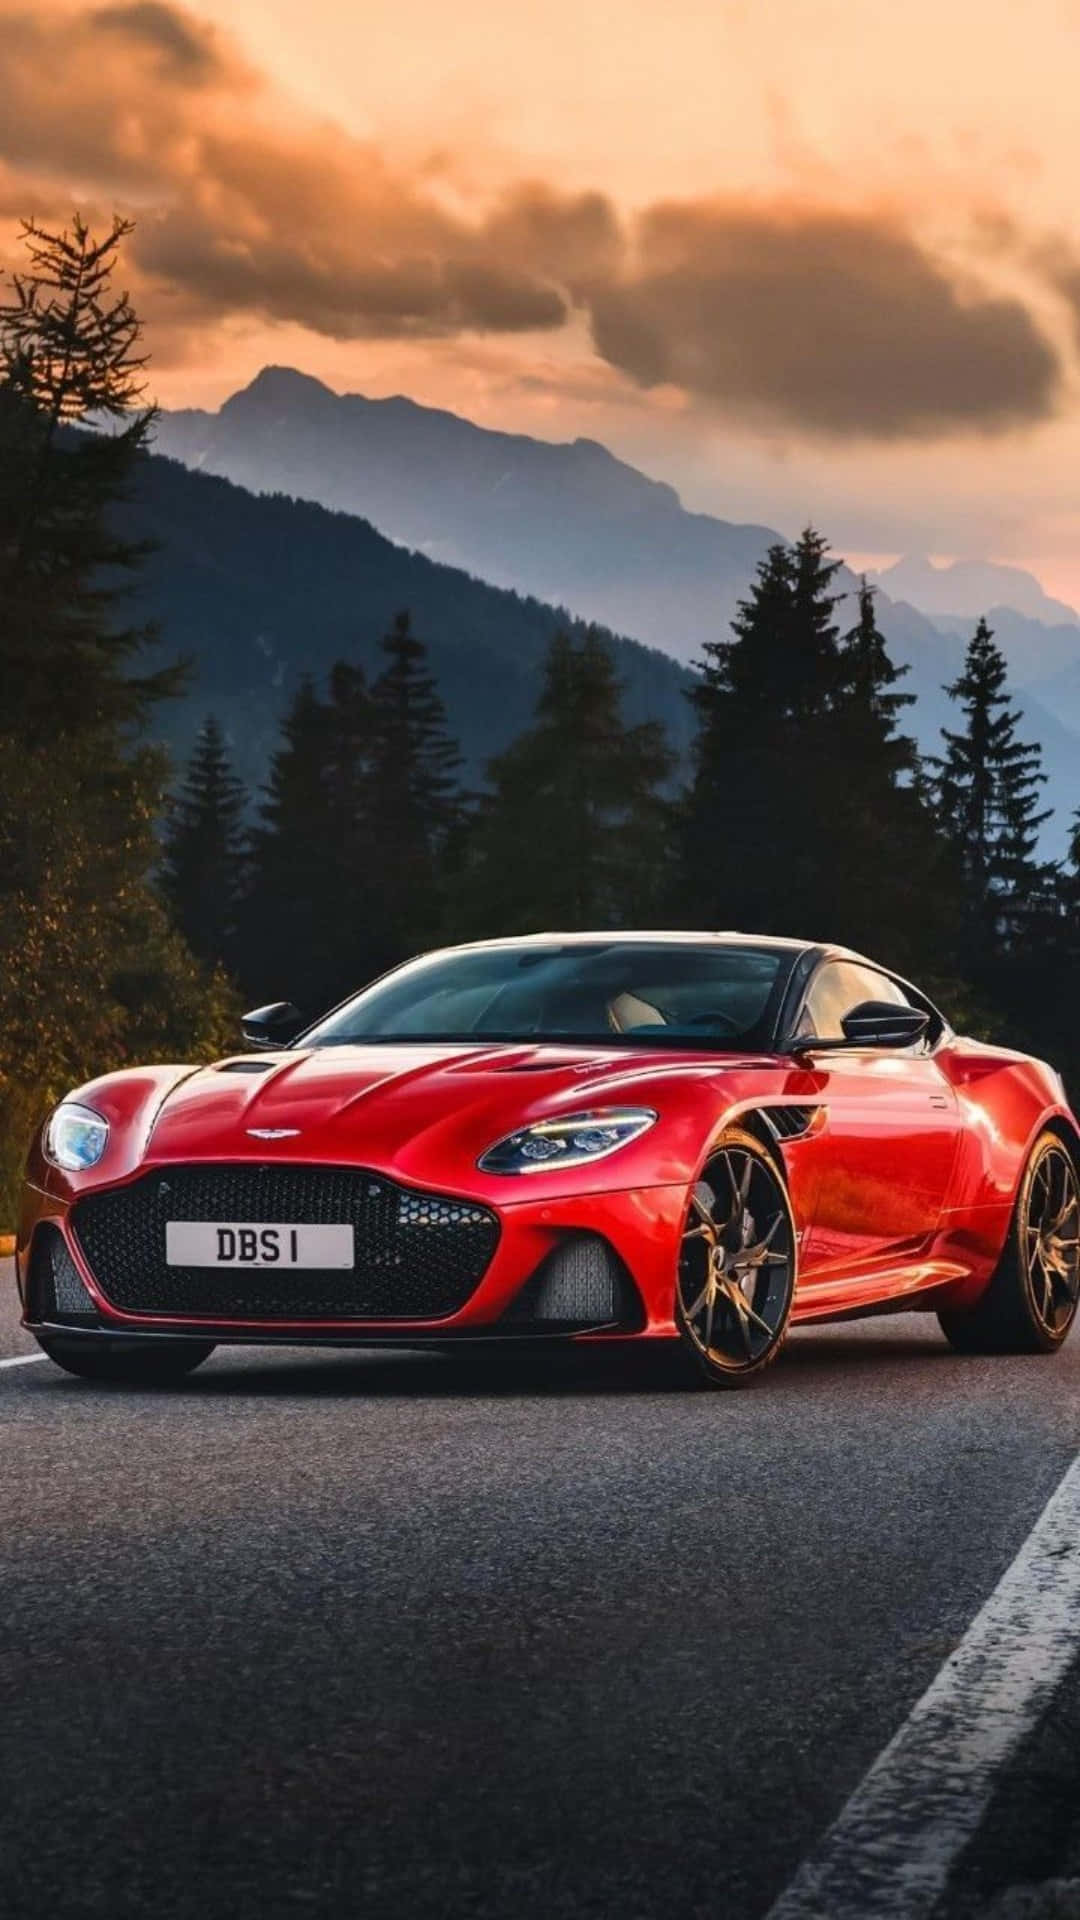 Sleek Aston Martin Vantage poised for action Wallpaper